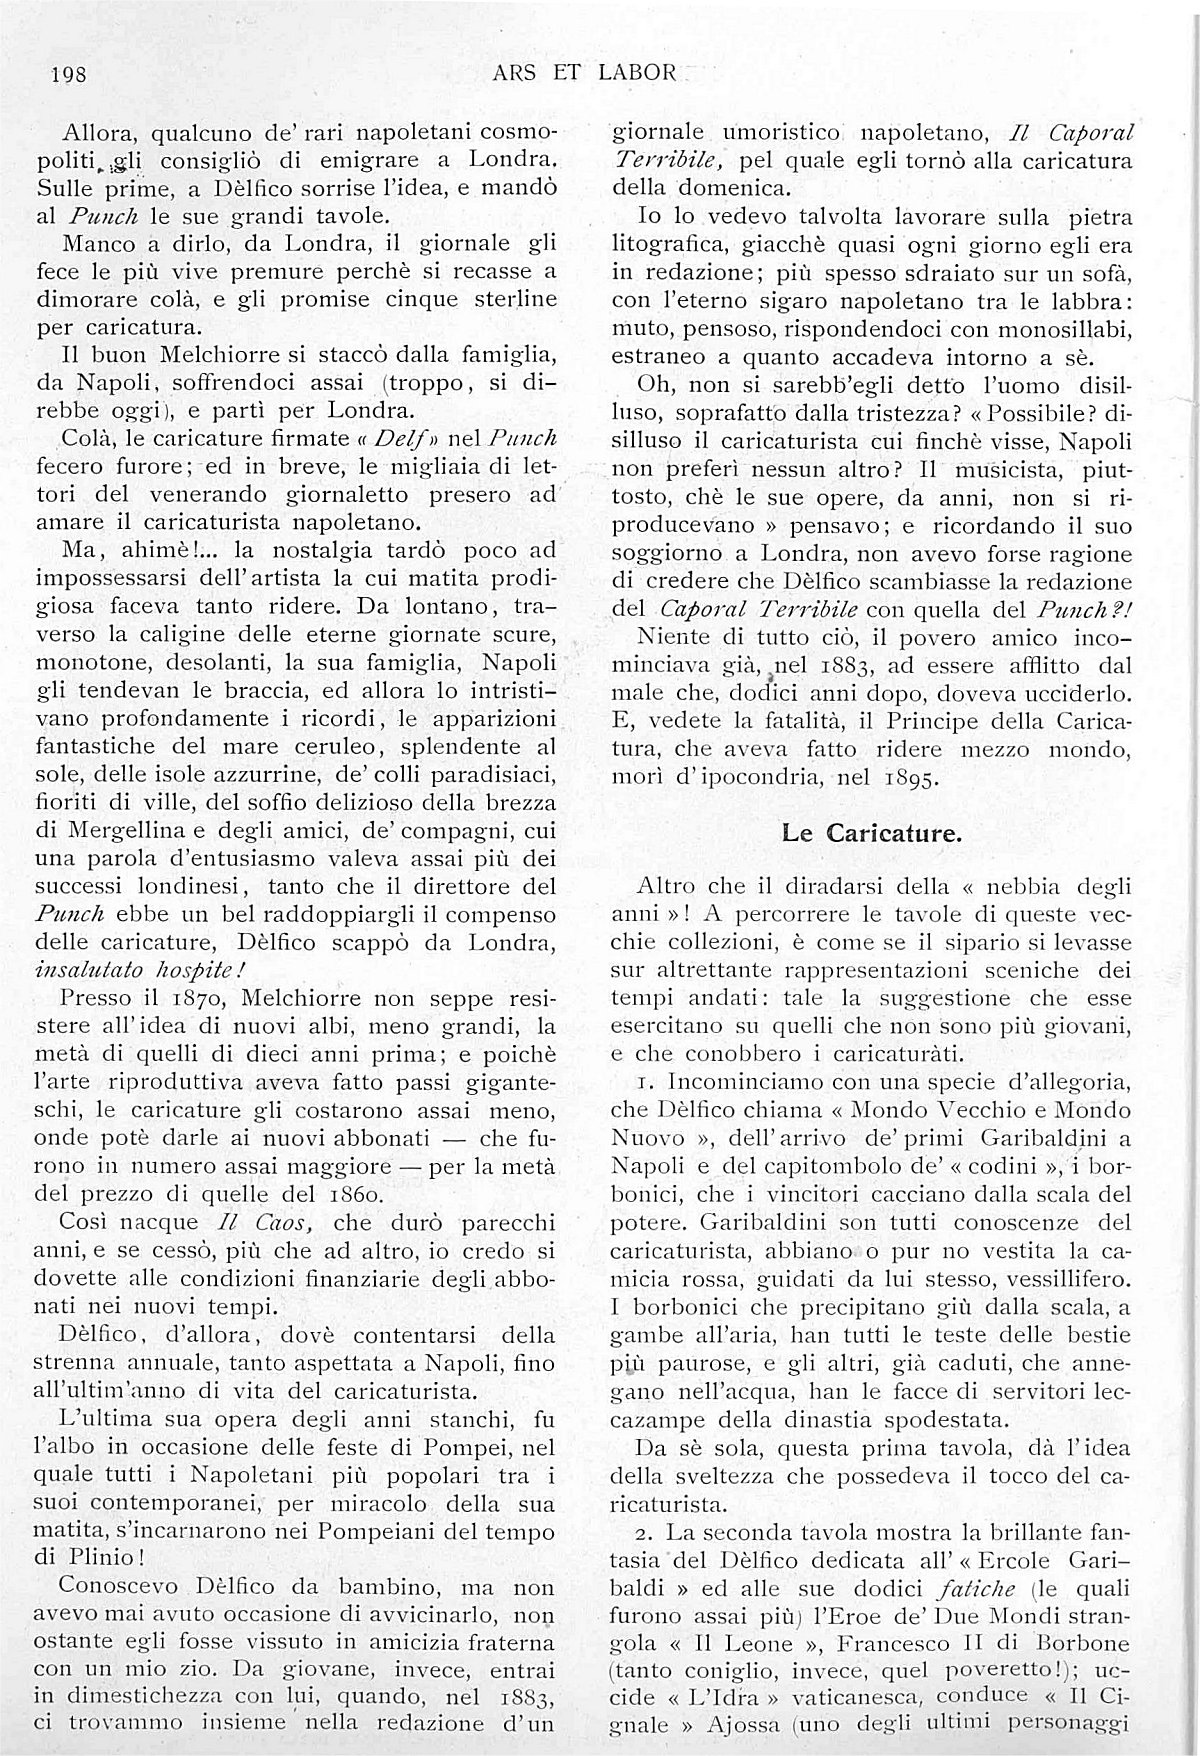 "Ars et Labor", Marzo 1906, anno 61°, n. 3, pag. 198